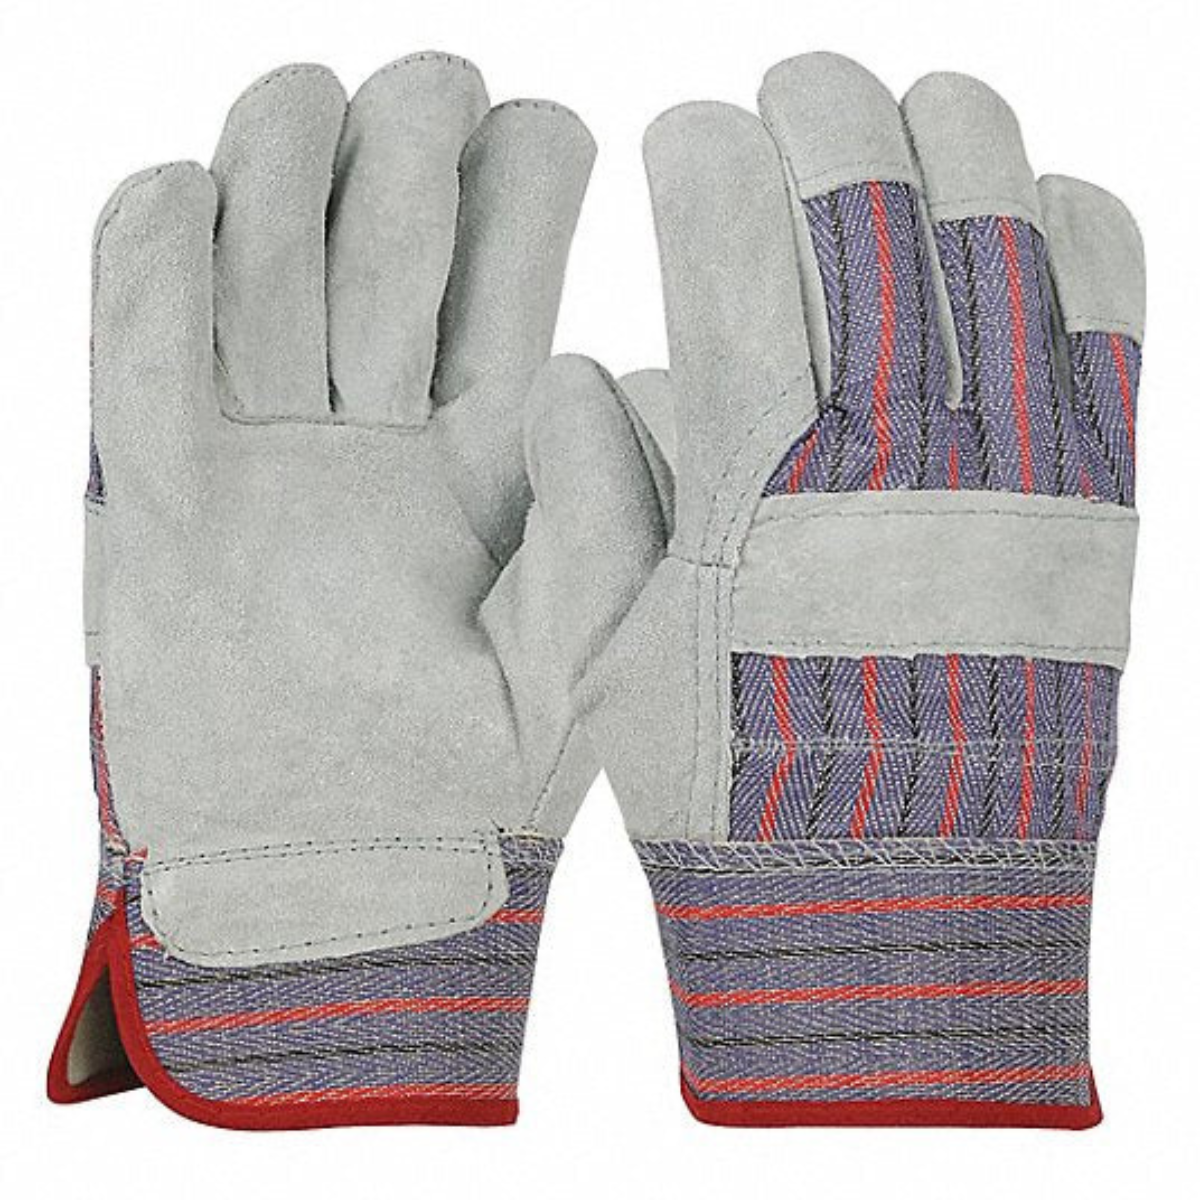 Best Welds Leather Gloves, 12pk - 2100